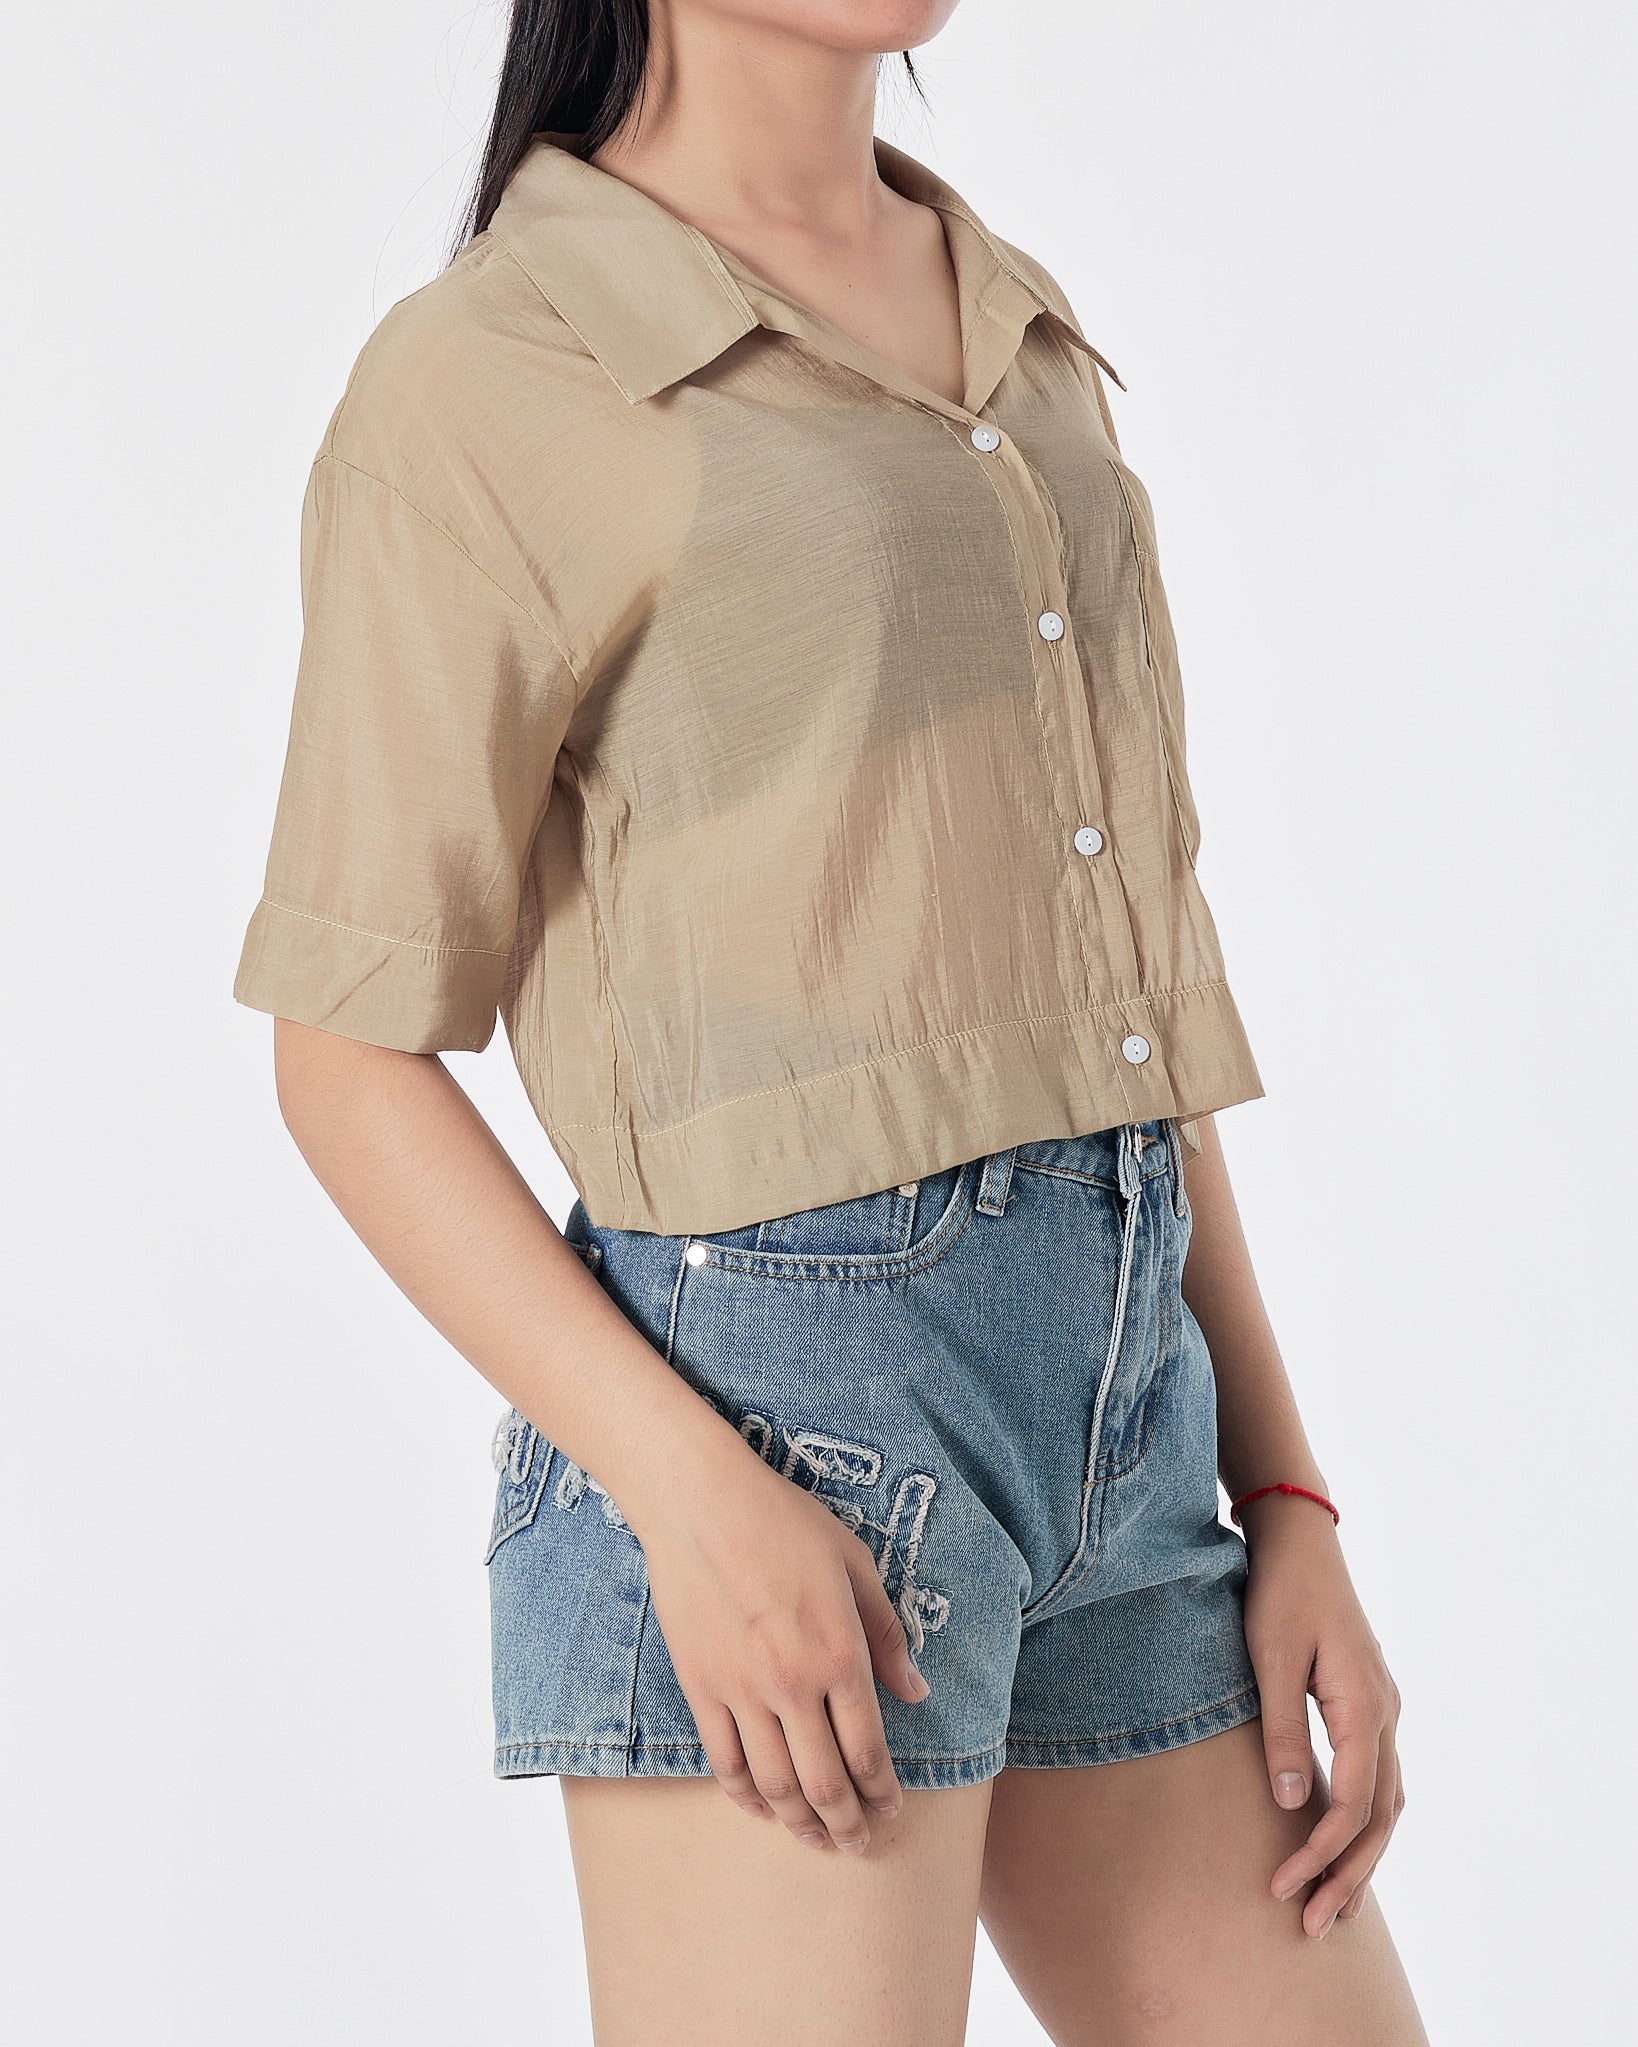 Plain Color Cream Lady Shirts Short Sleeve 12.90